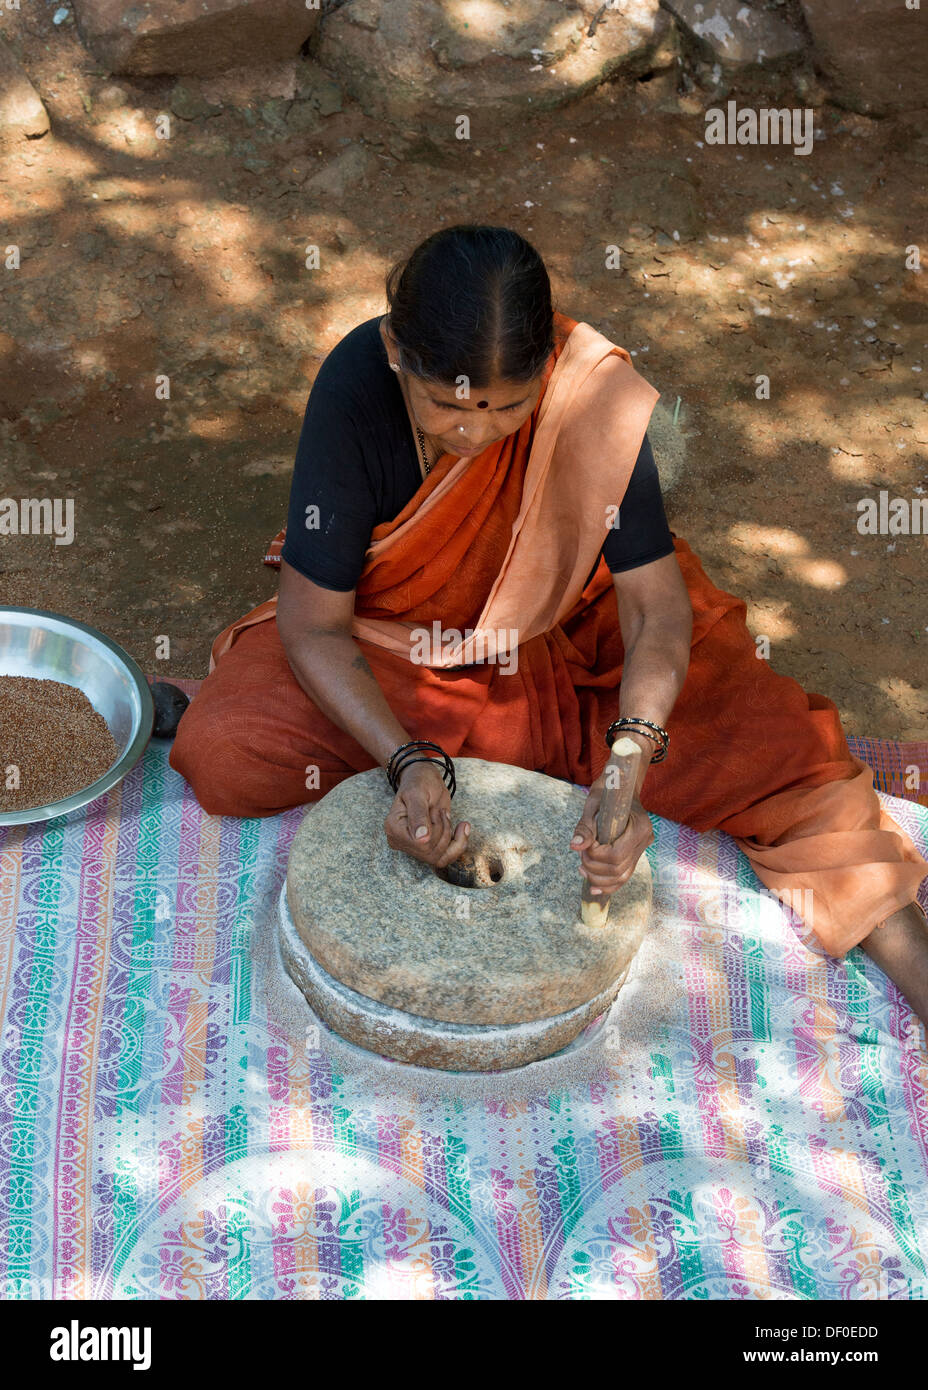 Rural Indian village woman using Quern stones to grind Finger Millet seed / Ragi seeds into Ragi flour. Andhra Pradesh. India Stock Photo